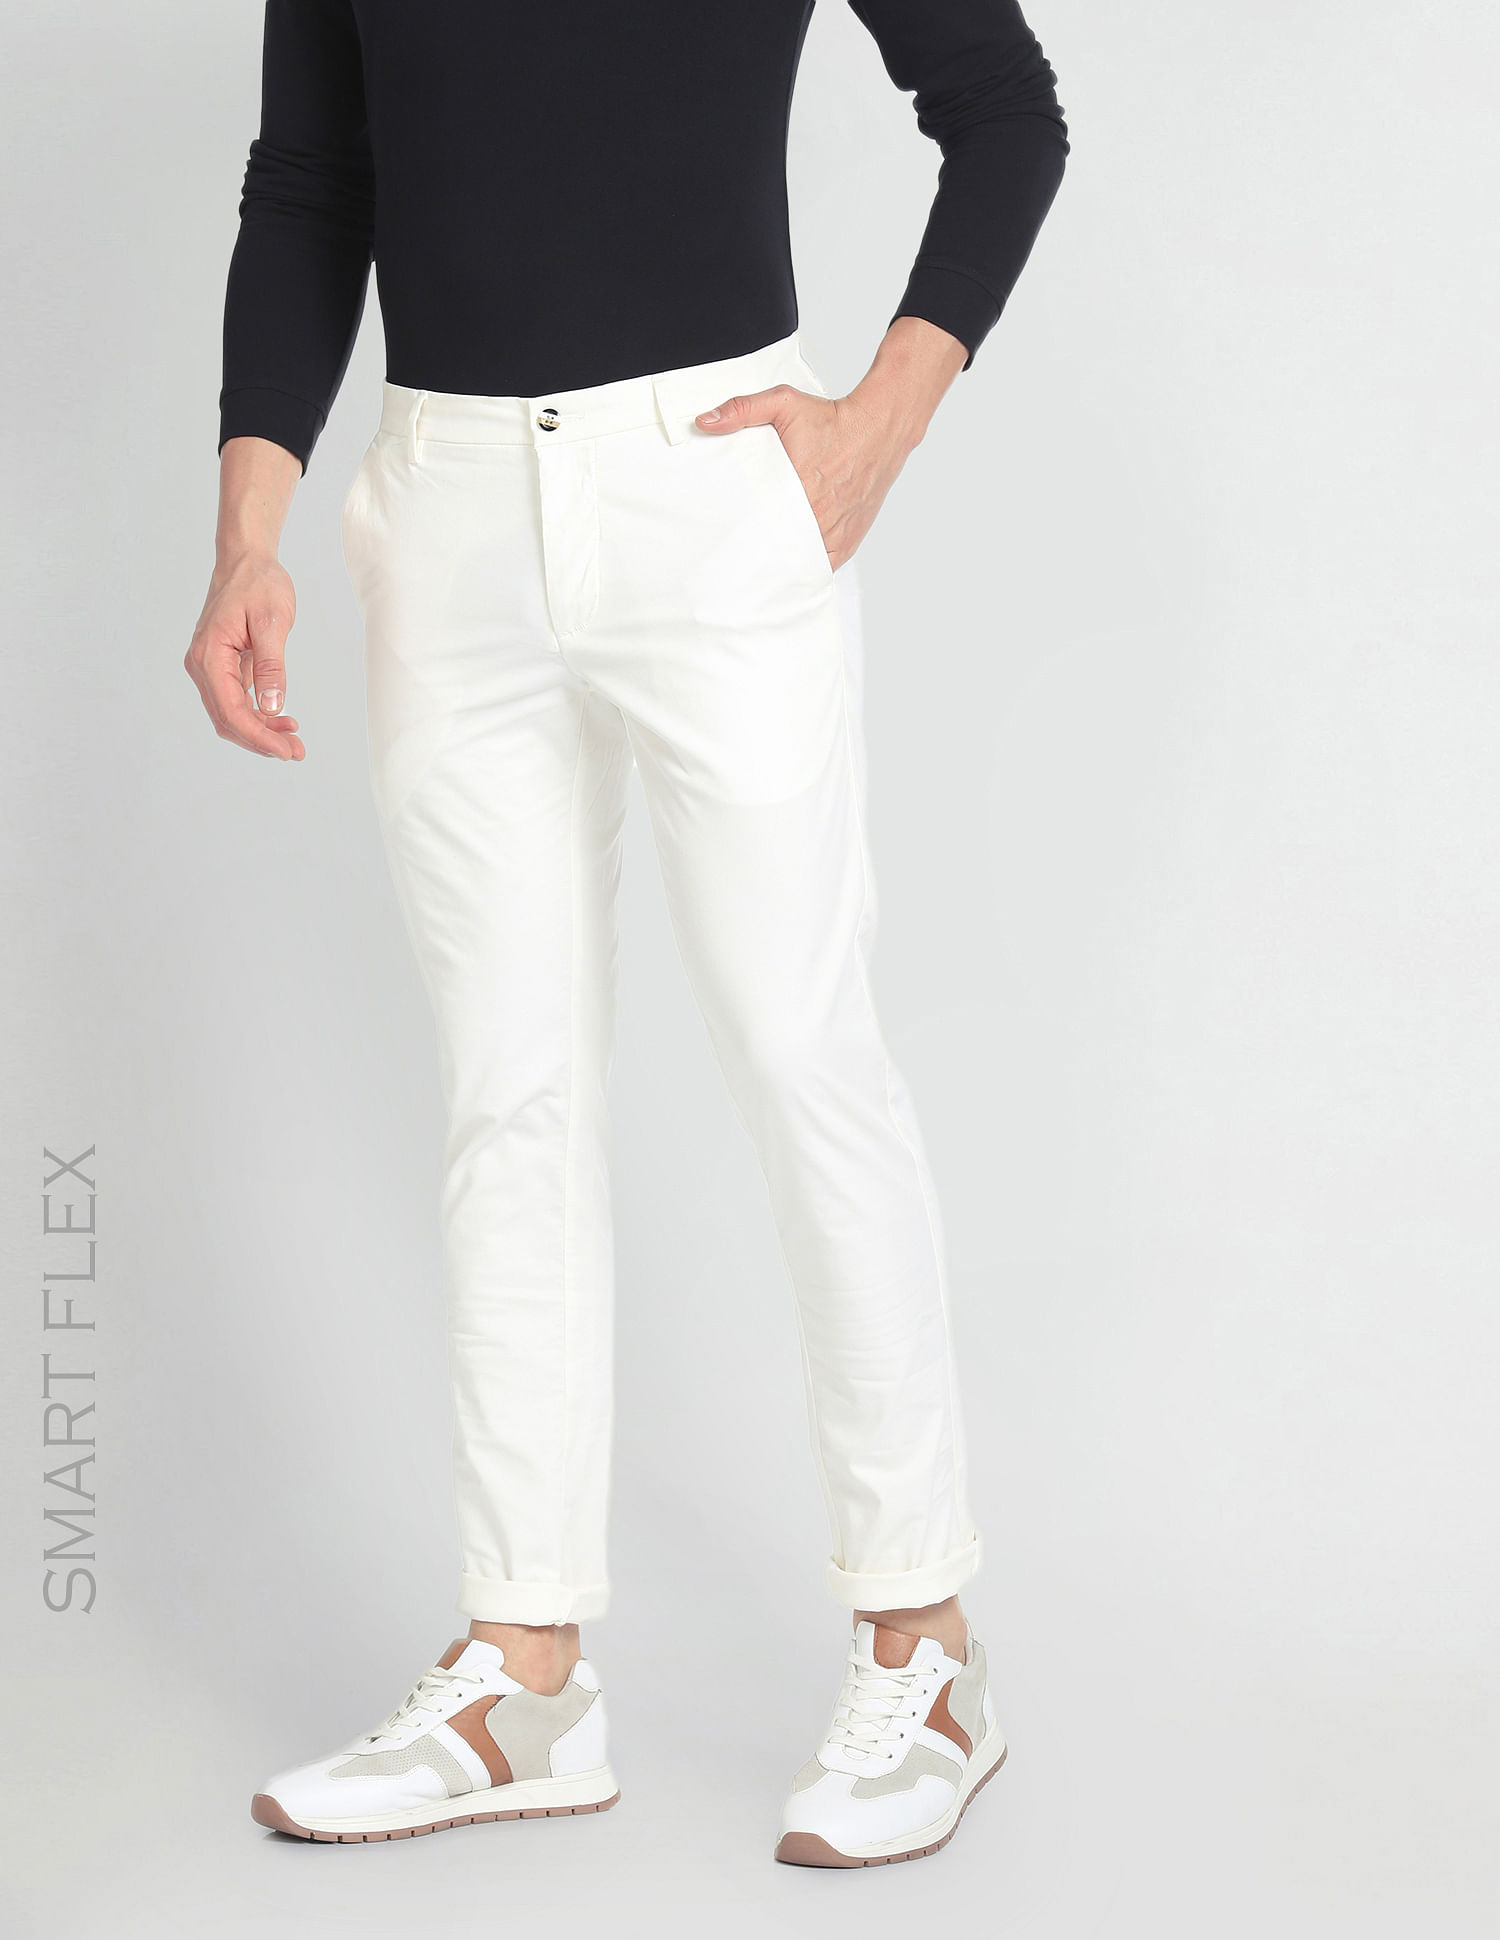 Buy Arrow Men Light Blue Jackson Super Slim Fit Smart Flex Formal Trousers  at Amazon.in